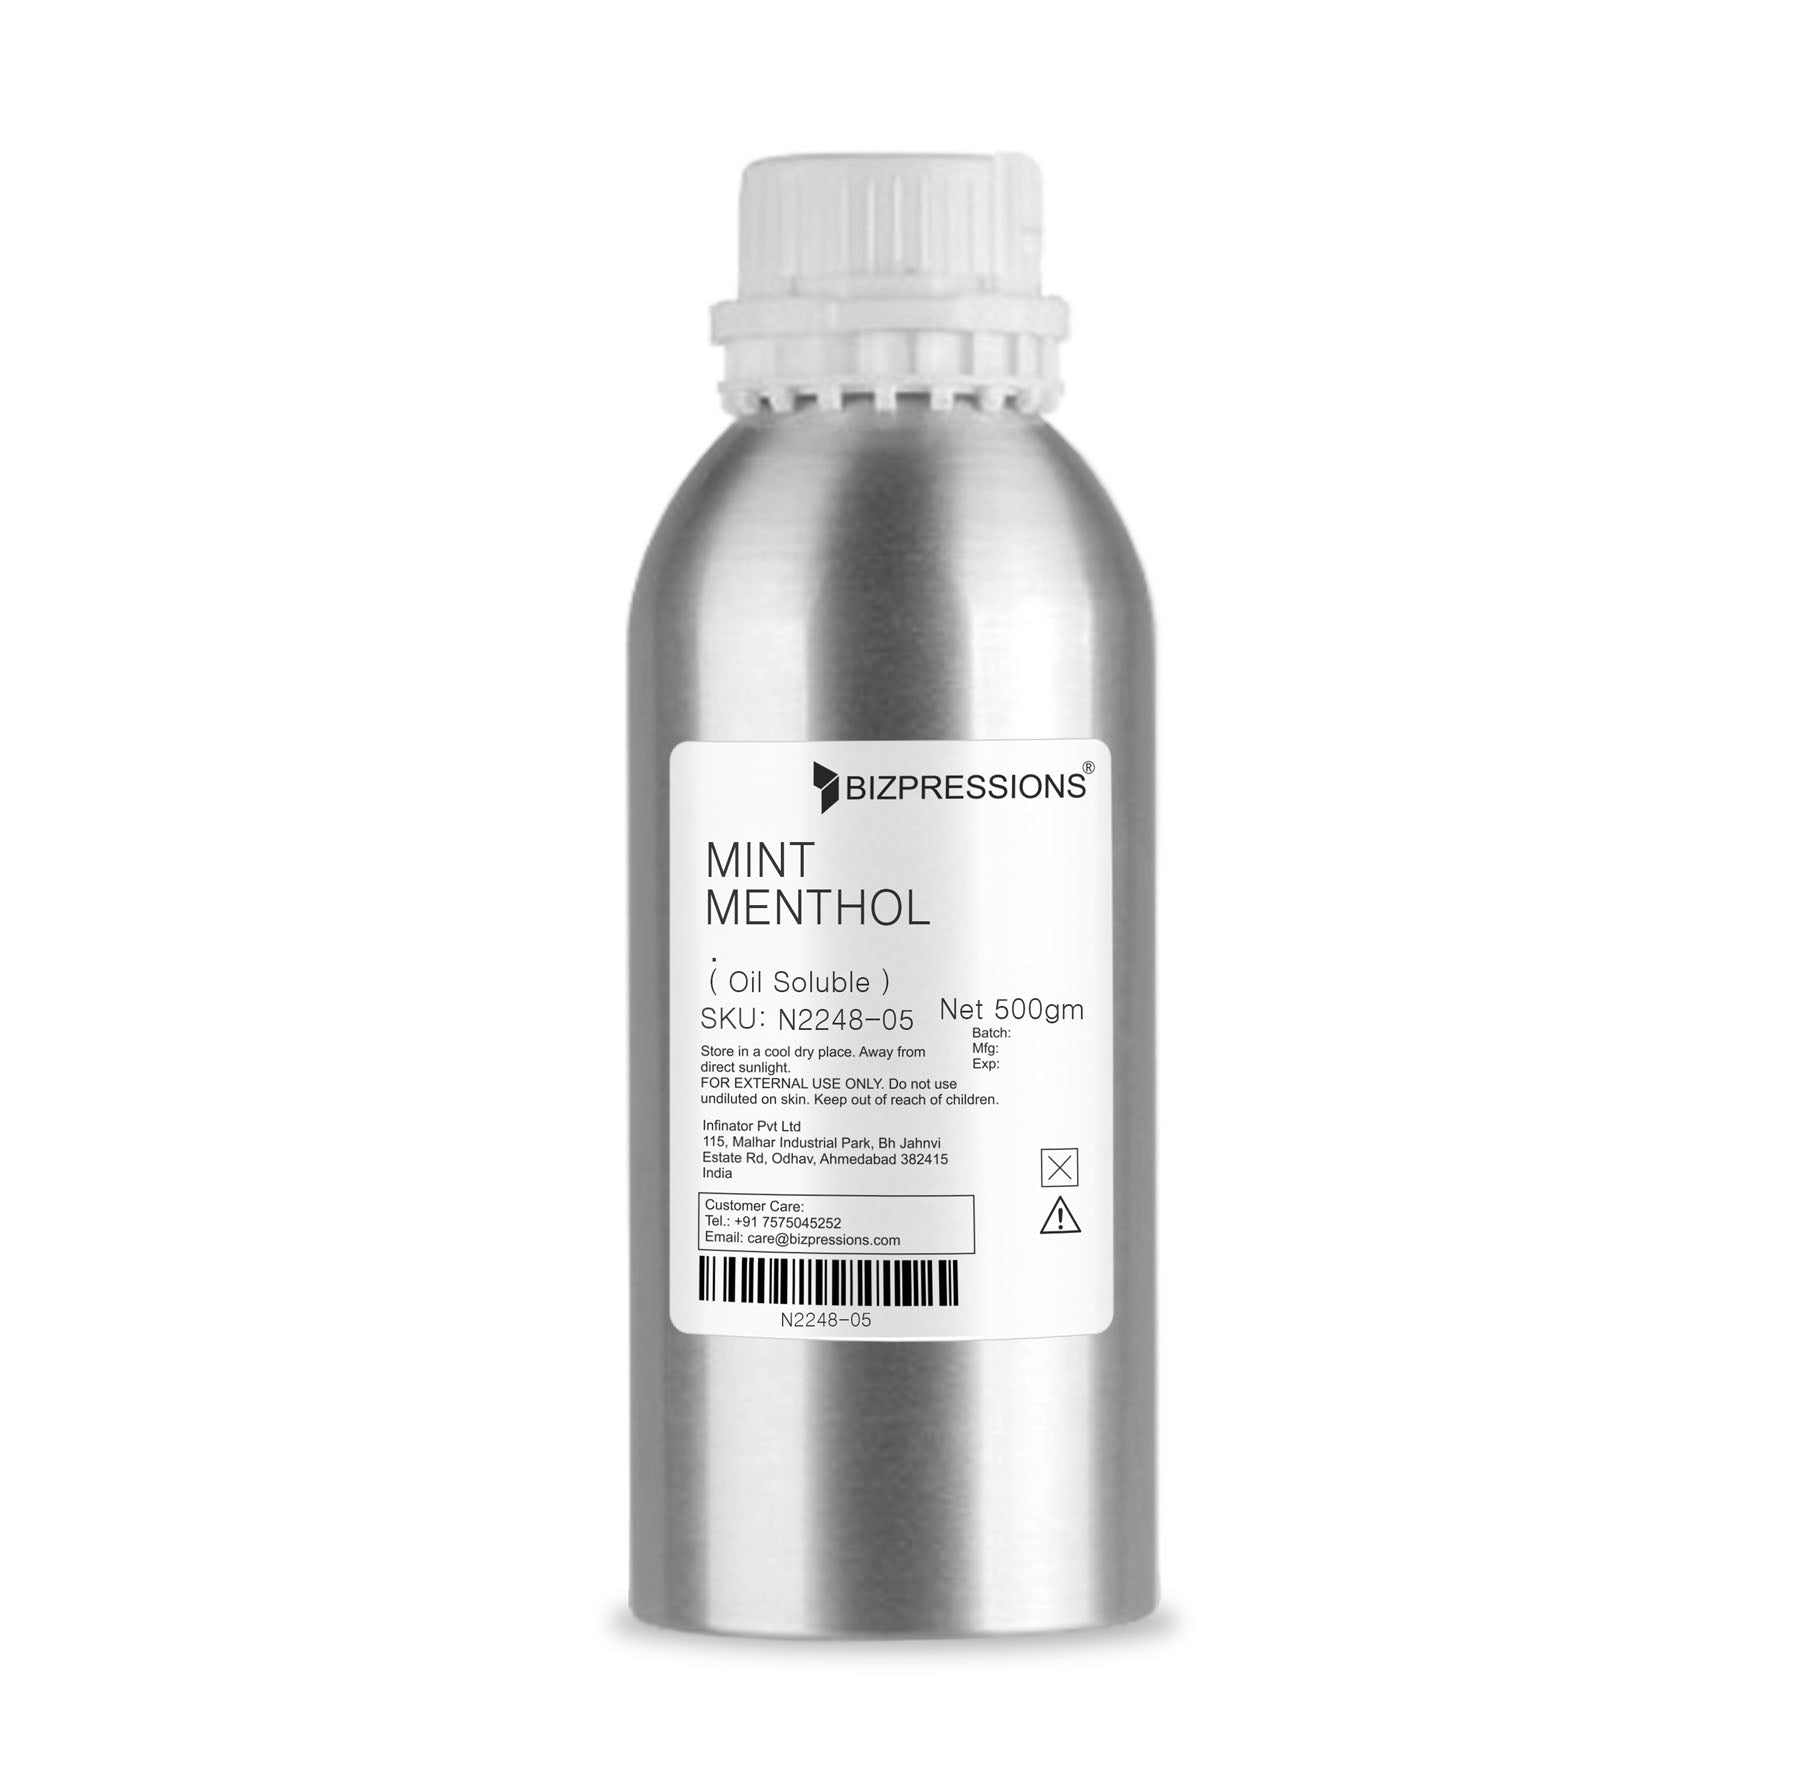 MINT MENTHOL - Fragrance ( Oil Soluble ) - 500 gm